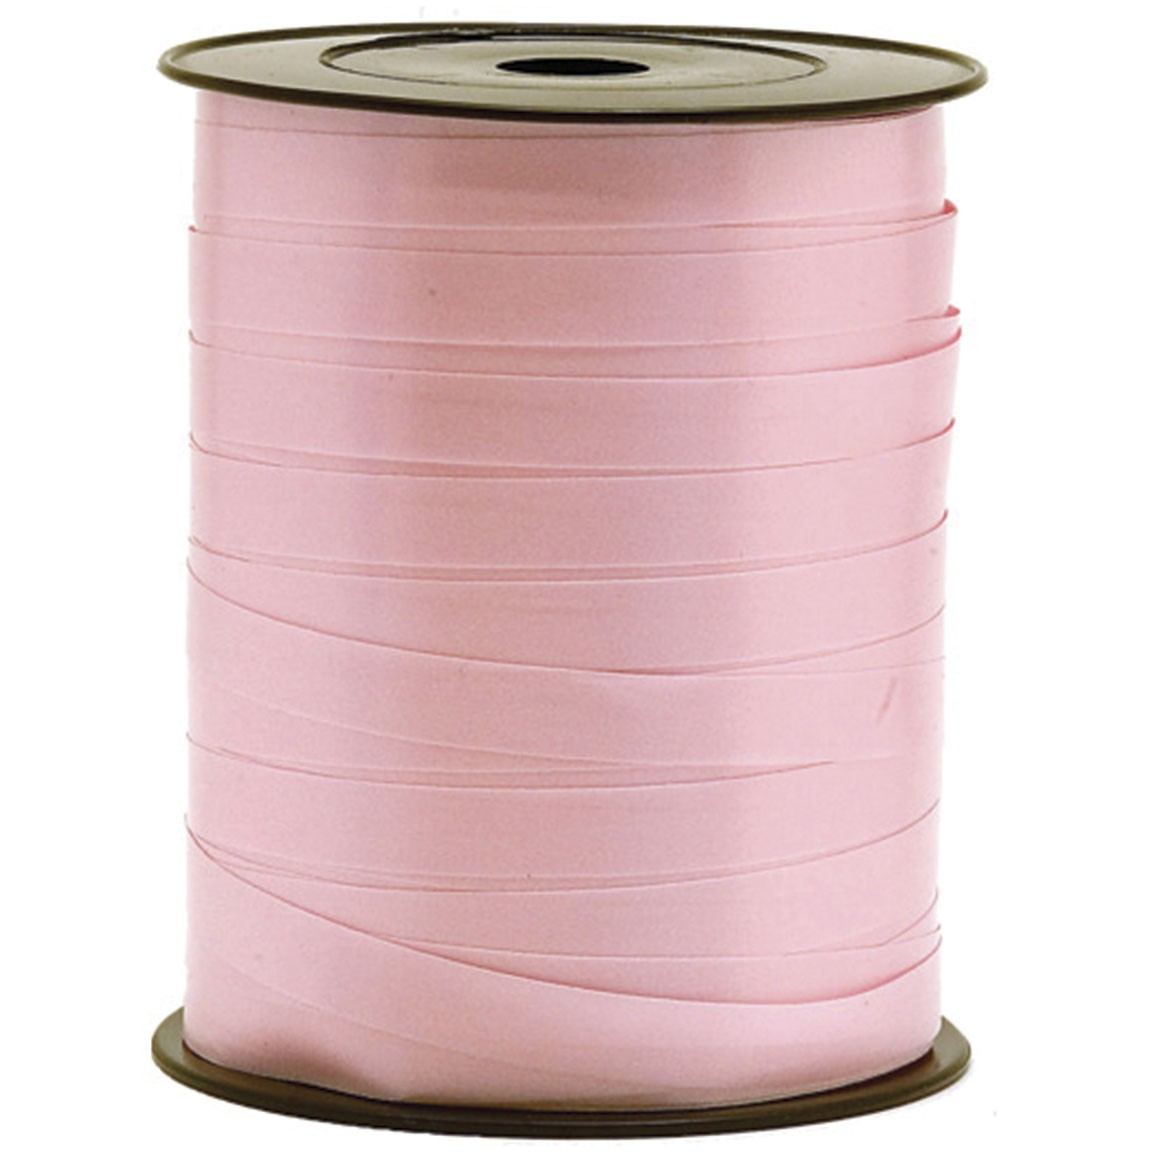 Polygavebånd B:10 mm L:250 m pink